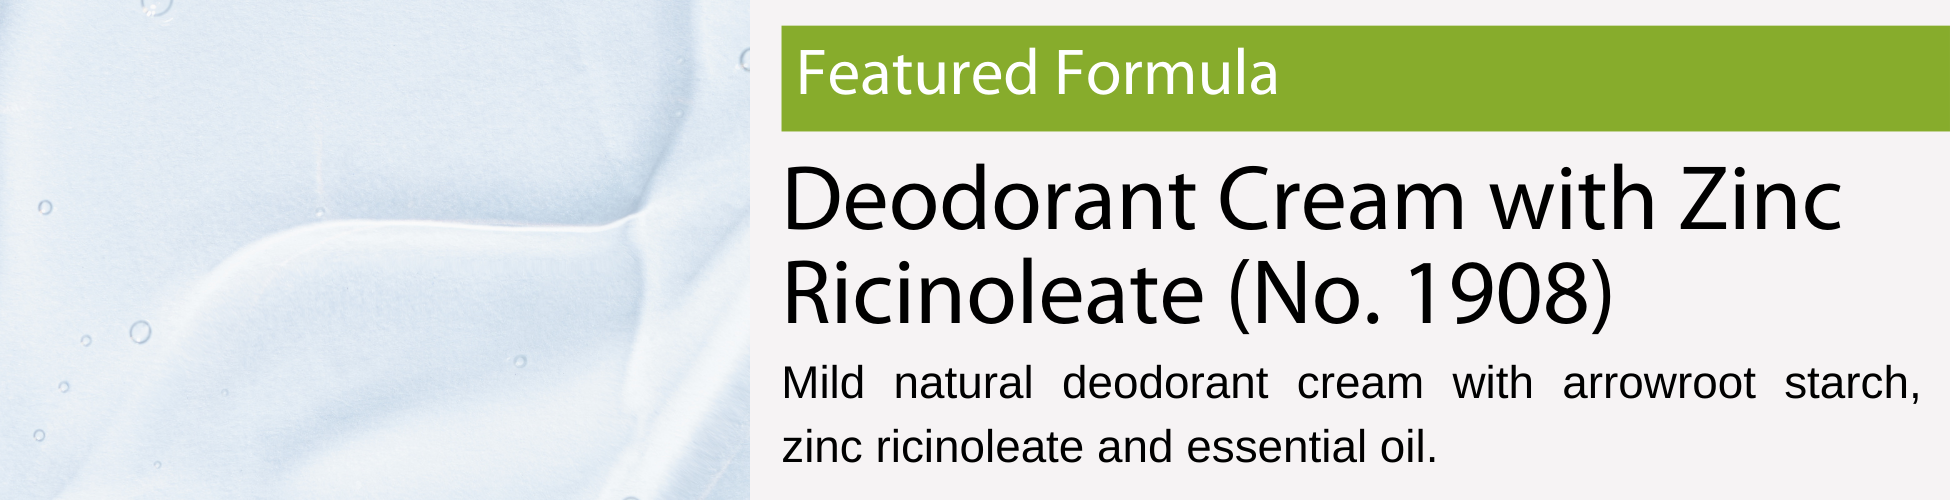 Formula for Deodorant Cream With Zinc